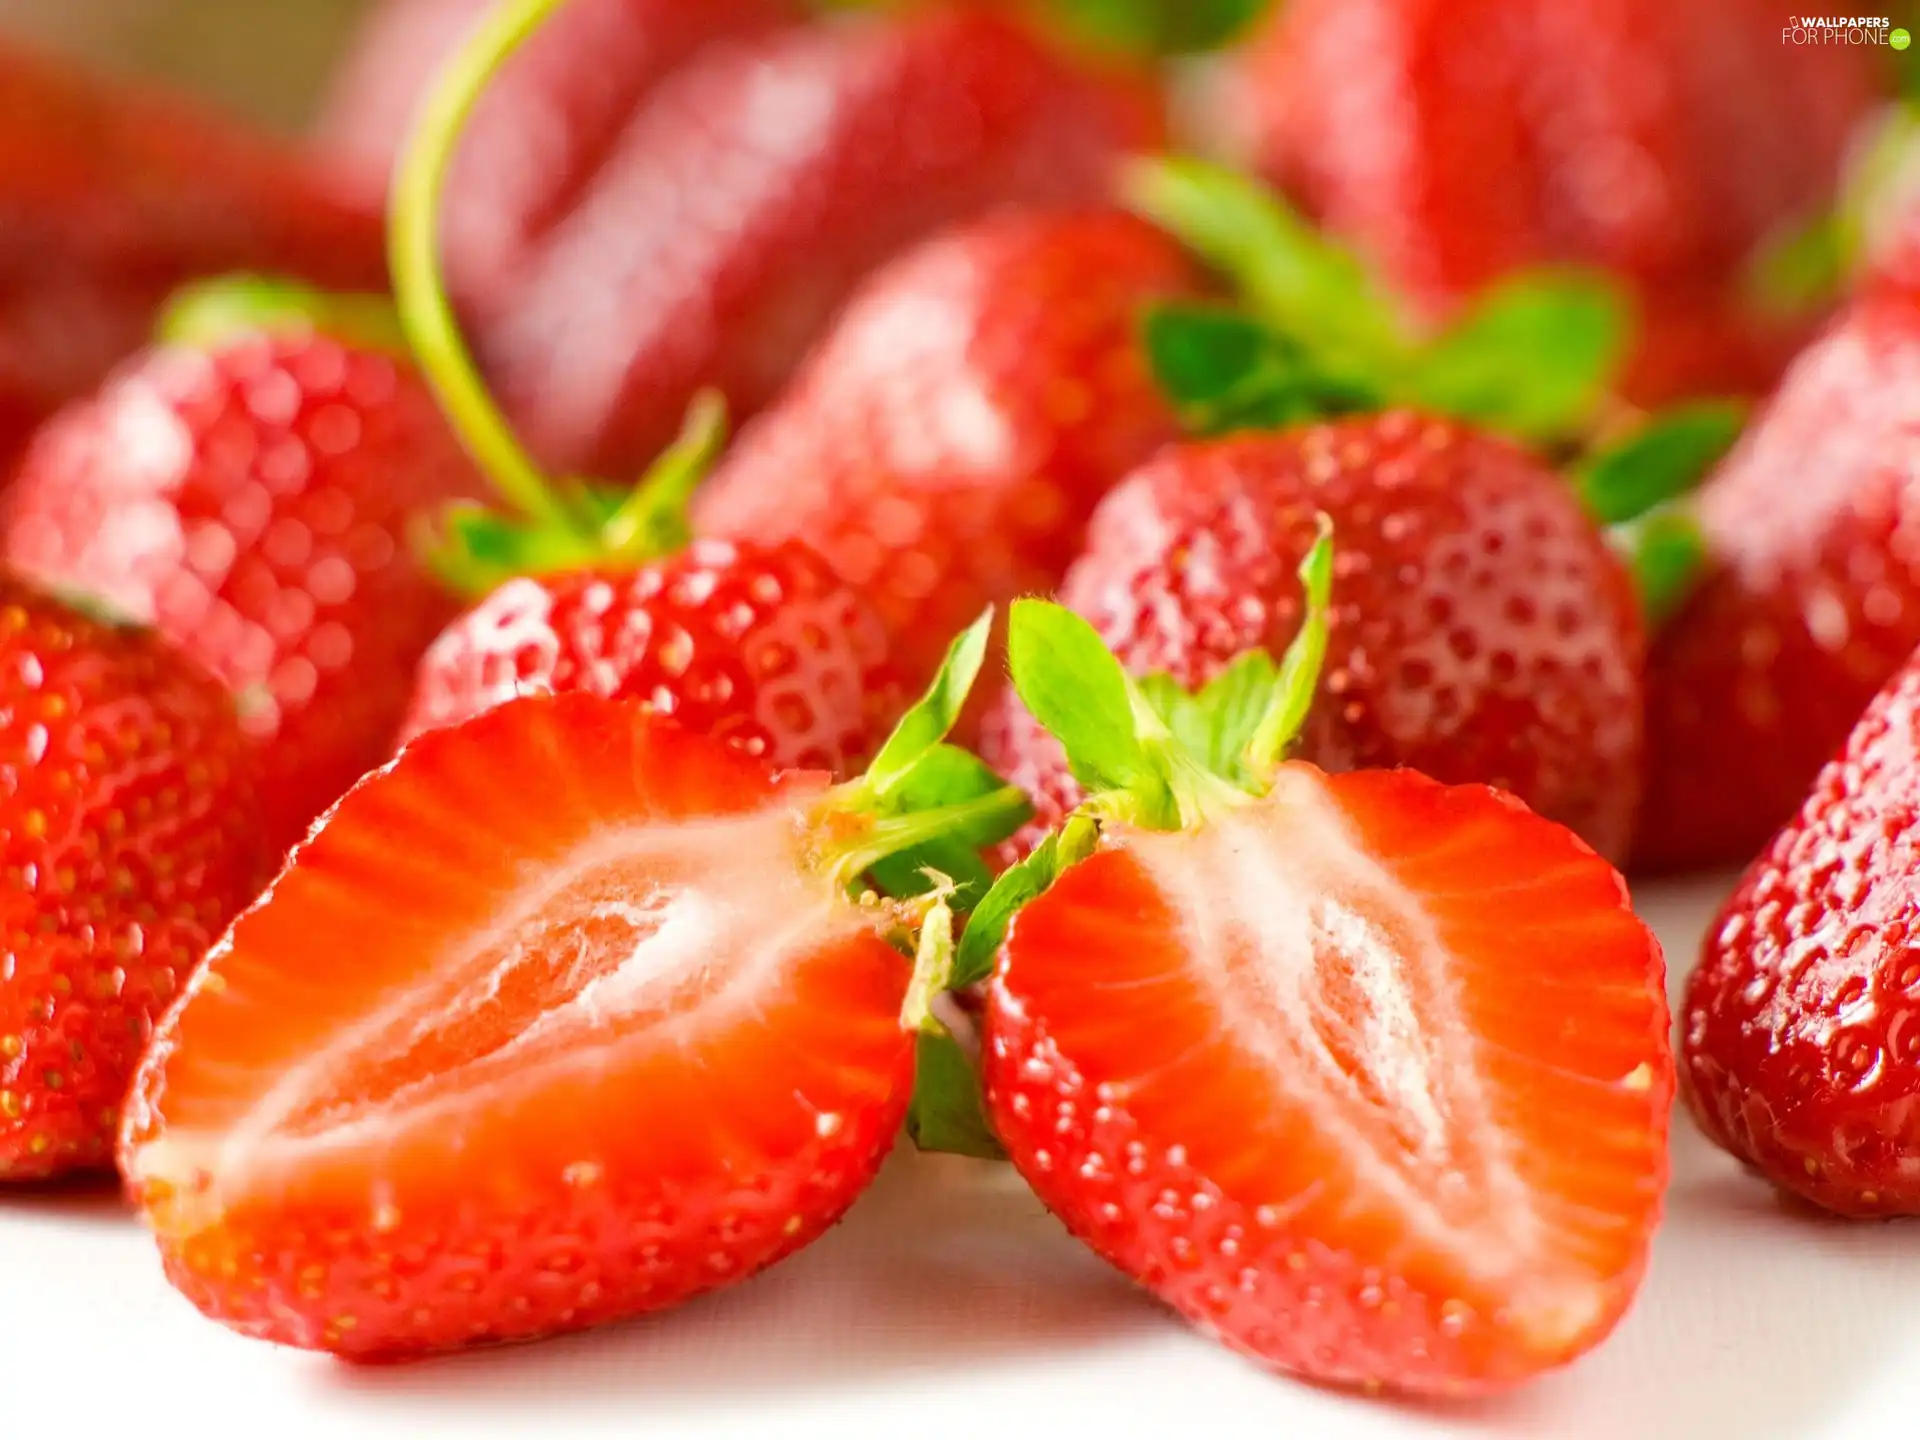 Fruits, strawberries